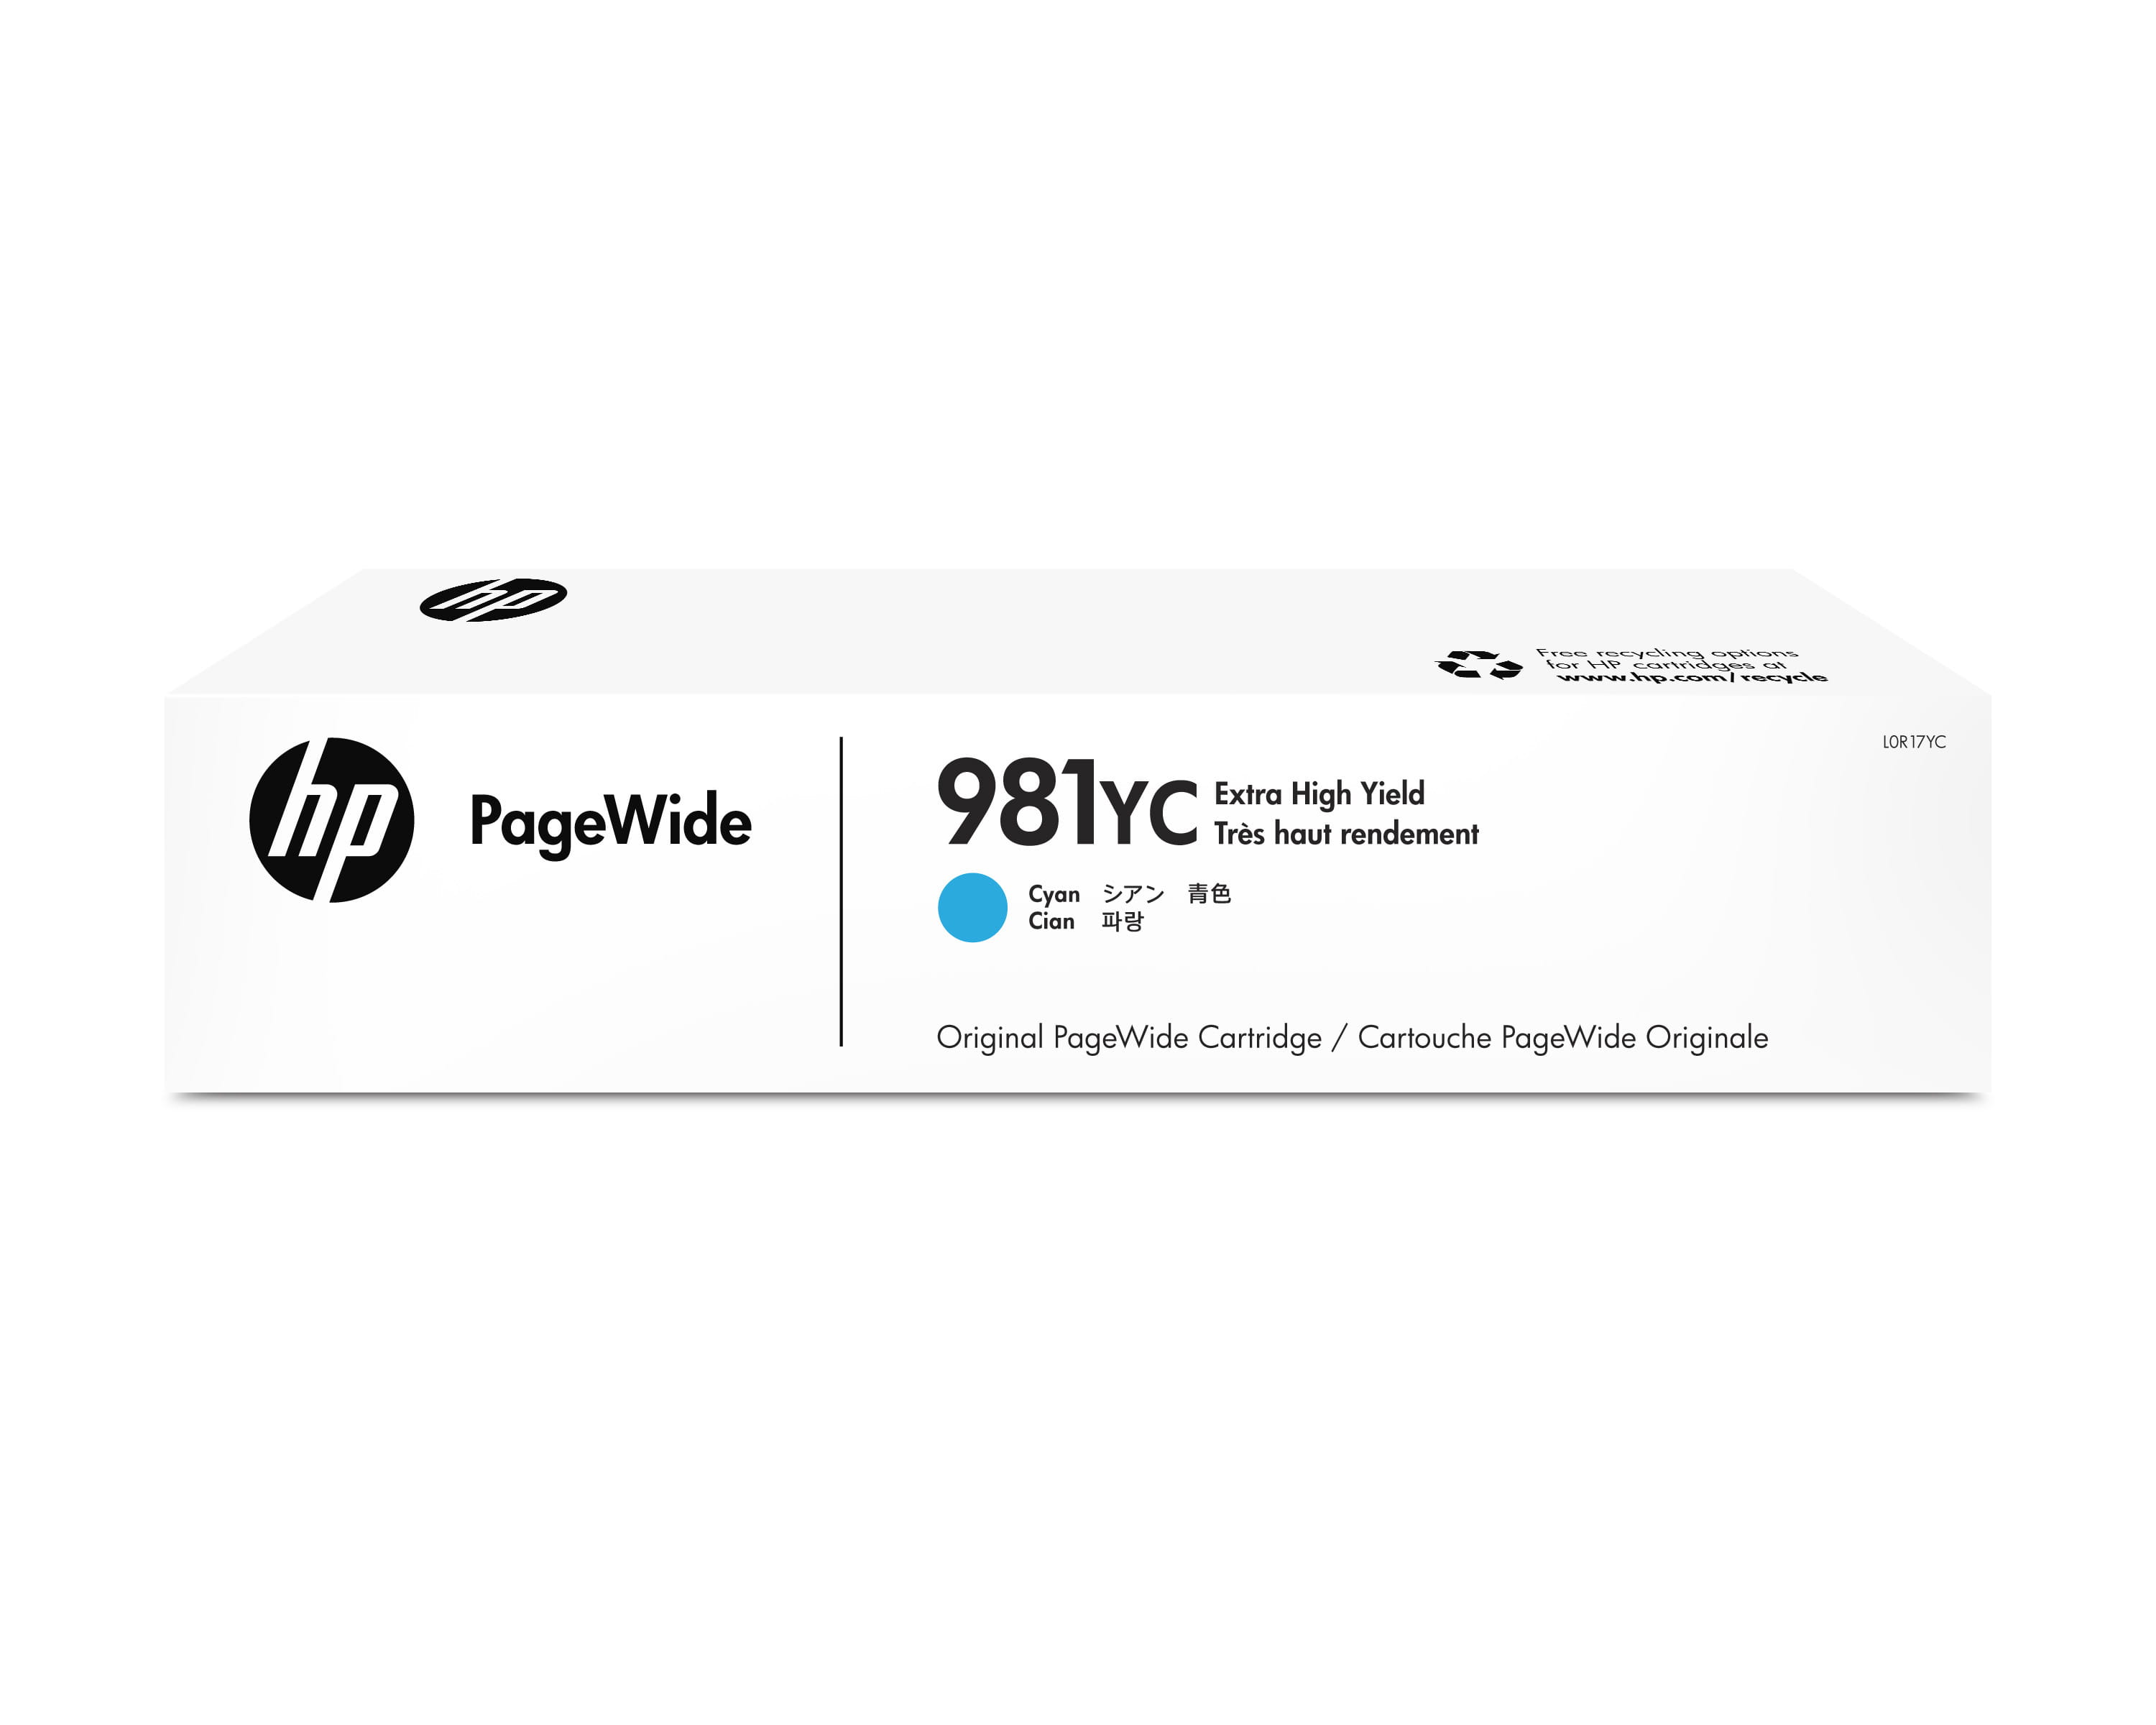 HP 981YC Cyan Contract PageWide Crtg, Original, Tinte auf Pigmentbasis, Cyan, HP, HP PageWide Enterprise Color 556/586, Tintenstrahldrucker